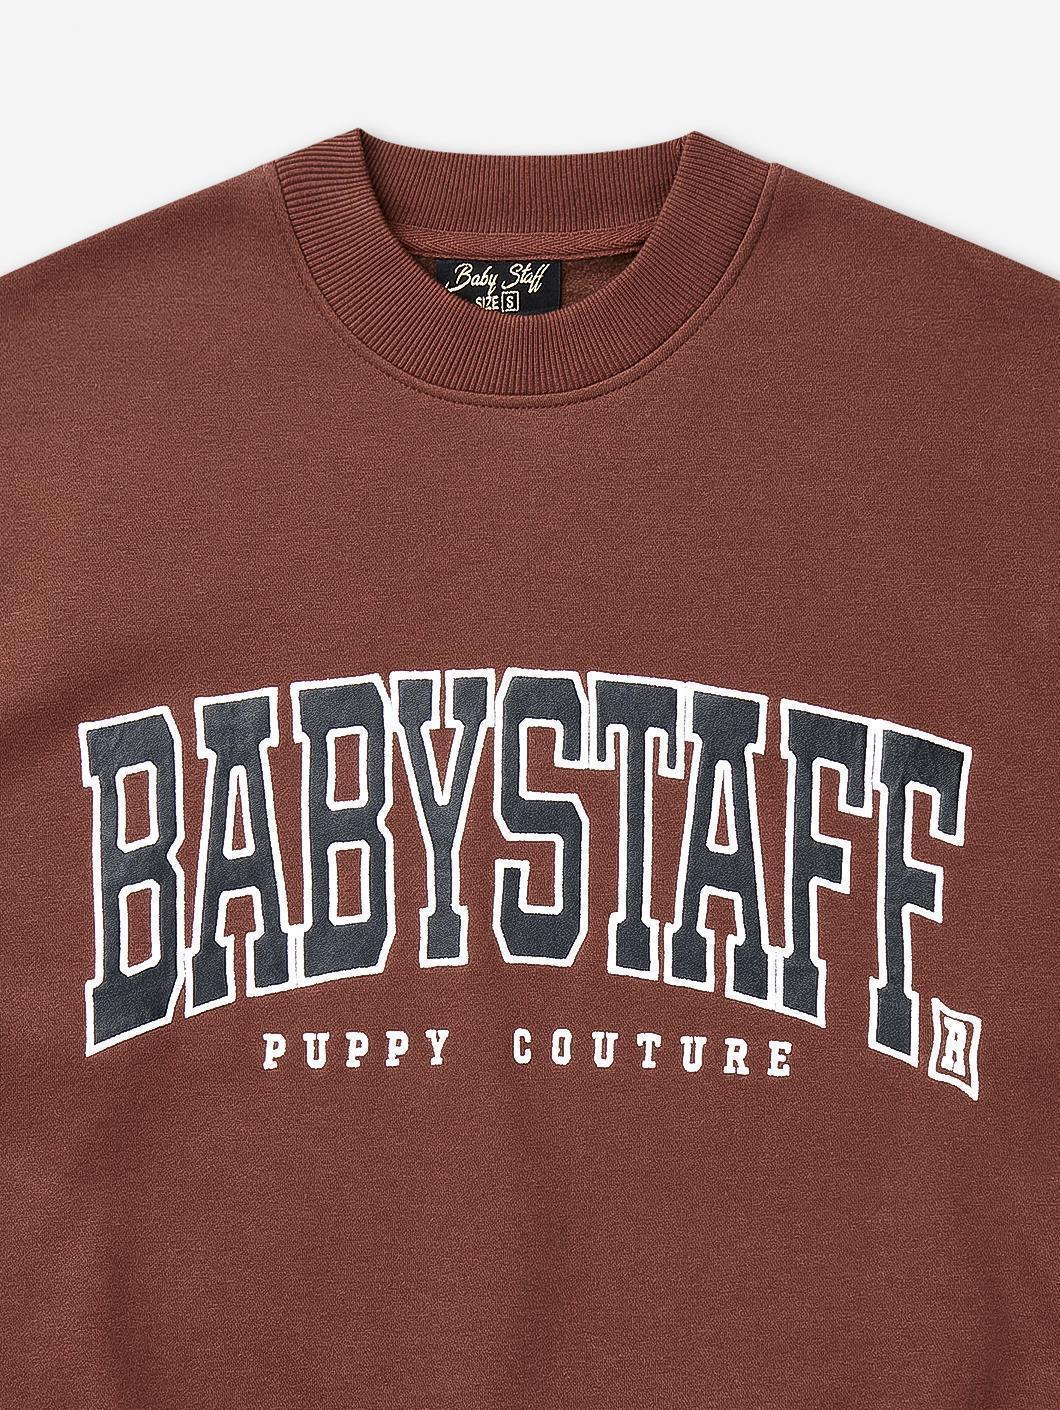 babystaff college oversized sweatshirt - 2